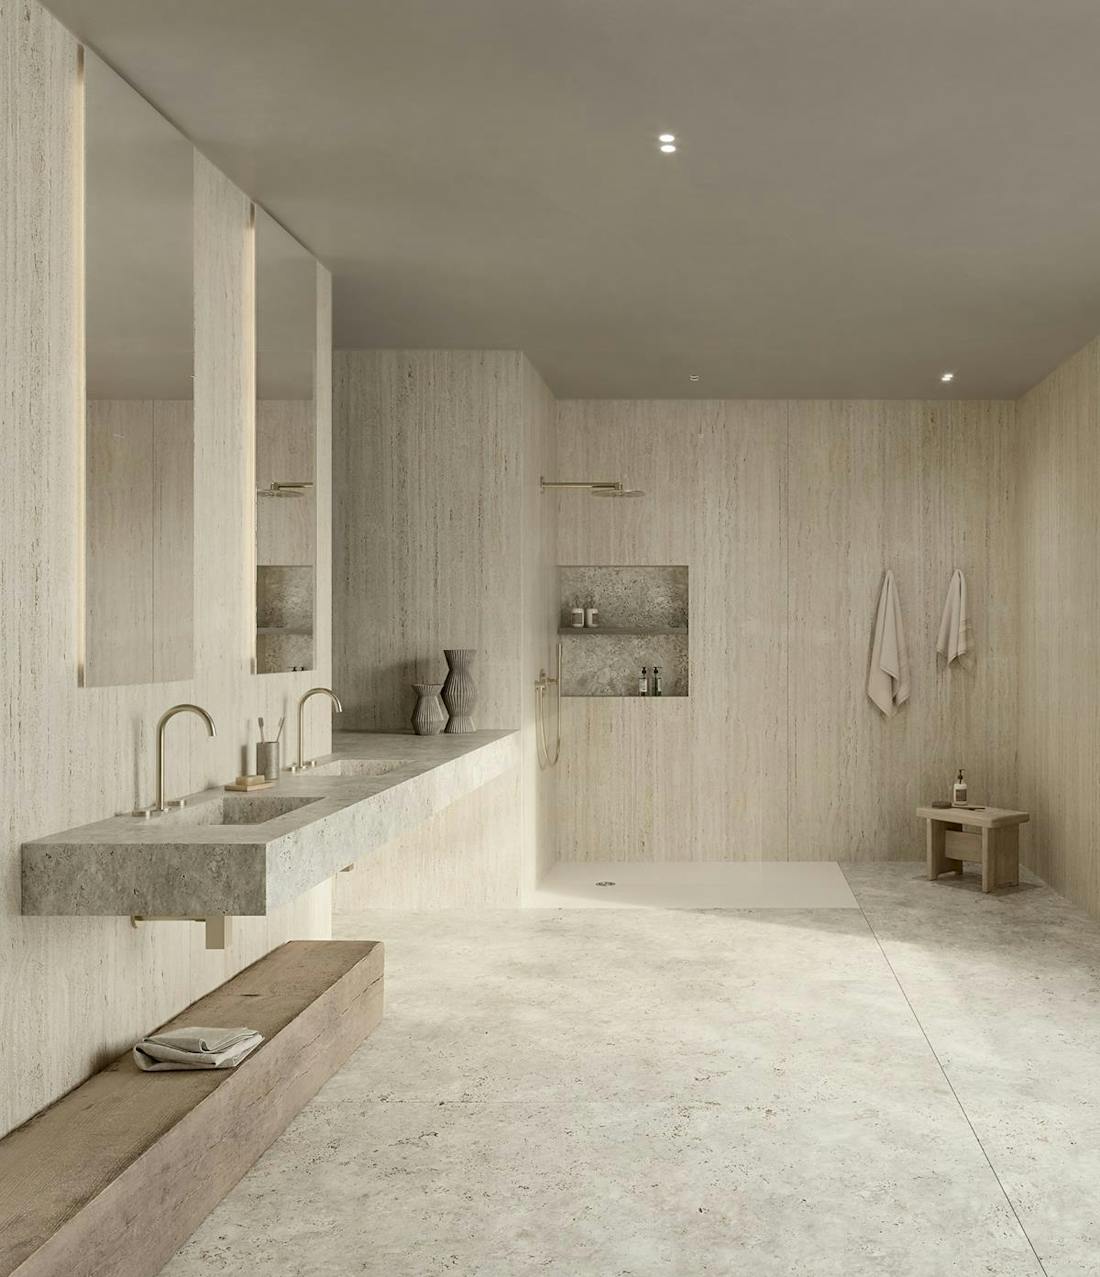 C-Bath: de complete badkamer volgens Cosentino